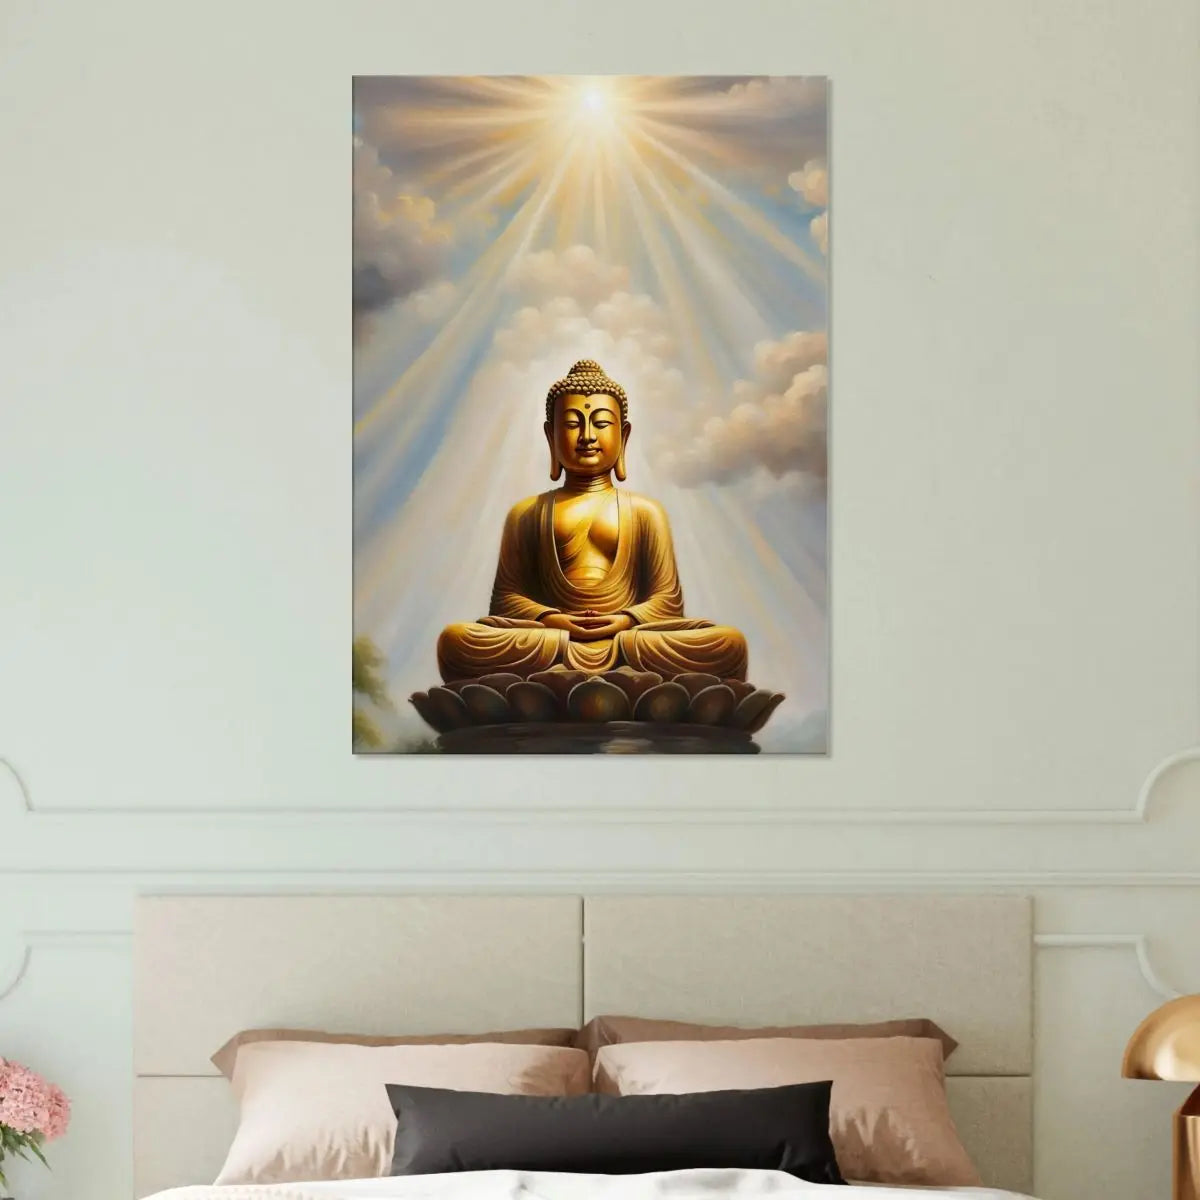 Leinwandbild - Buddha - Malerischer Stil, KI-Kunst - RolConArt, Spirituelle Vielfalt, 